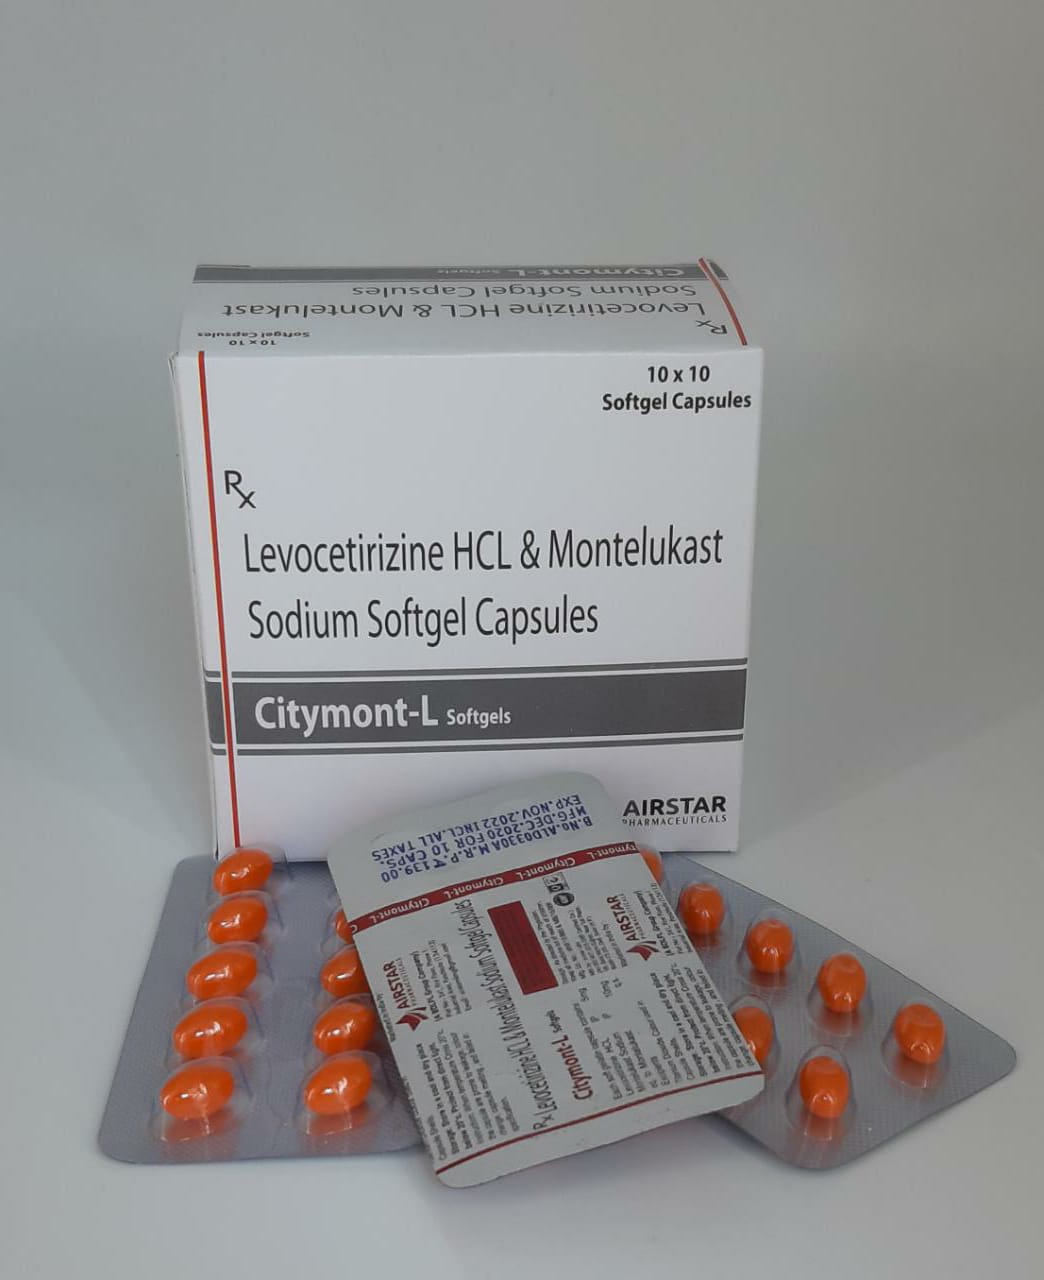 Product Name: Citymont L, Compositions of Citymont L are Levocetrizine HCL & Montelukast Sodium Softgel Capsules - Biodiscovery Lifesciences Pvt Ltd